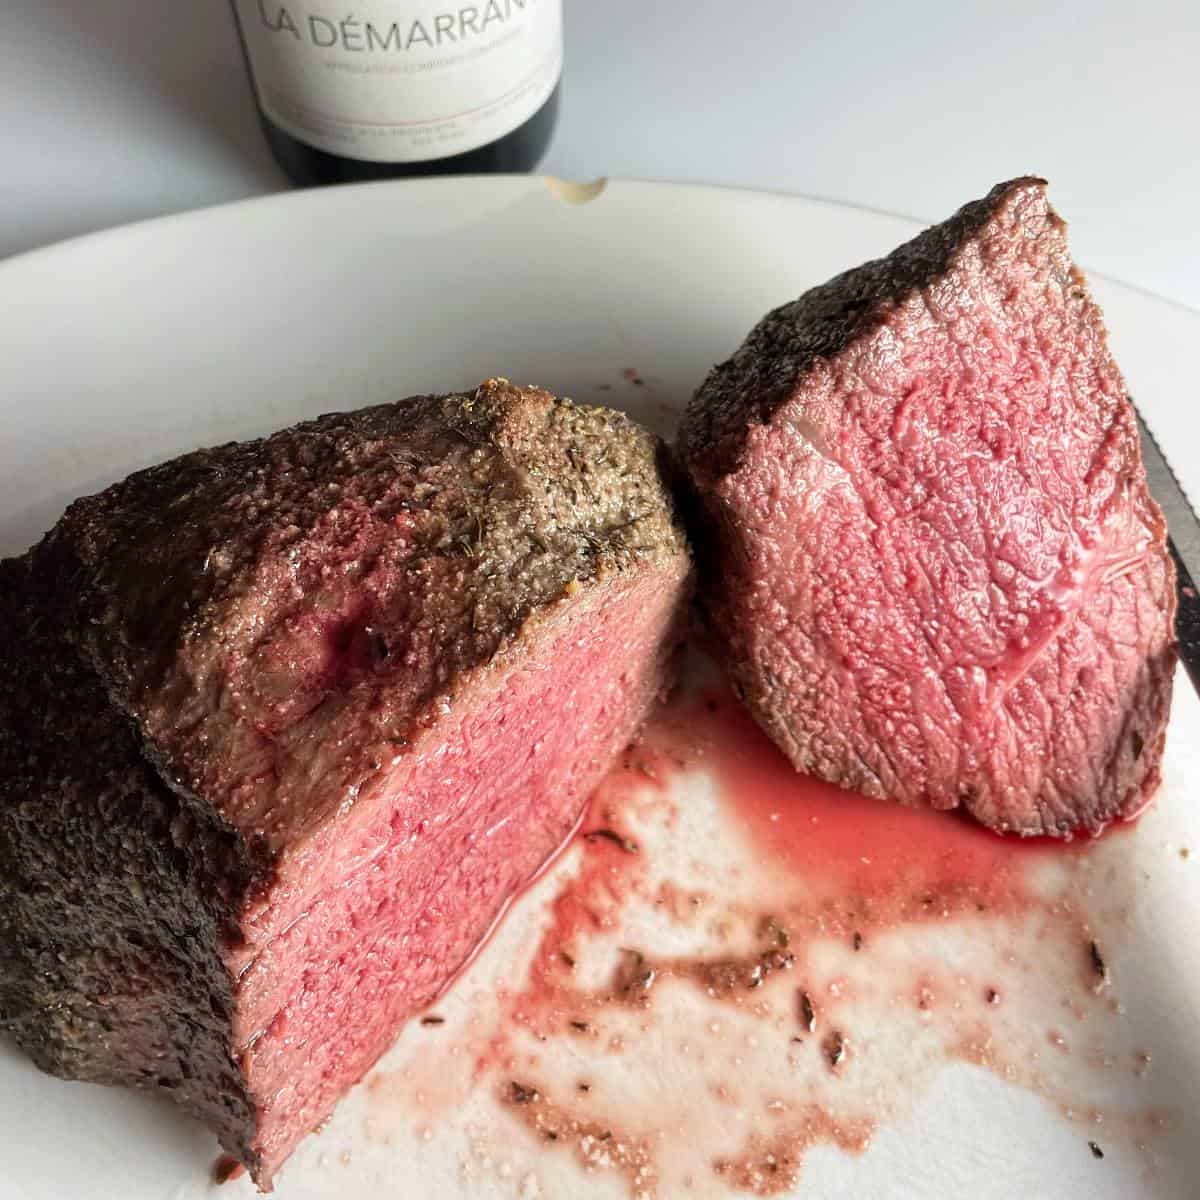 Medium rare top round roast beef, sliced in half, on a white platter.